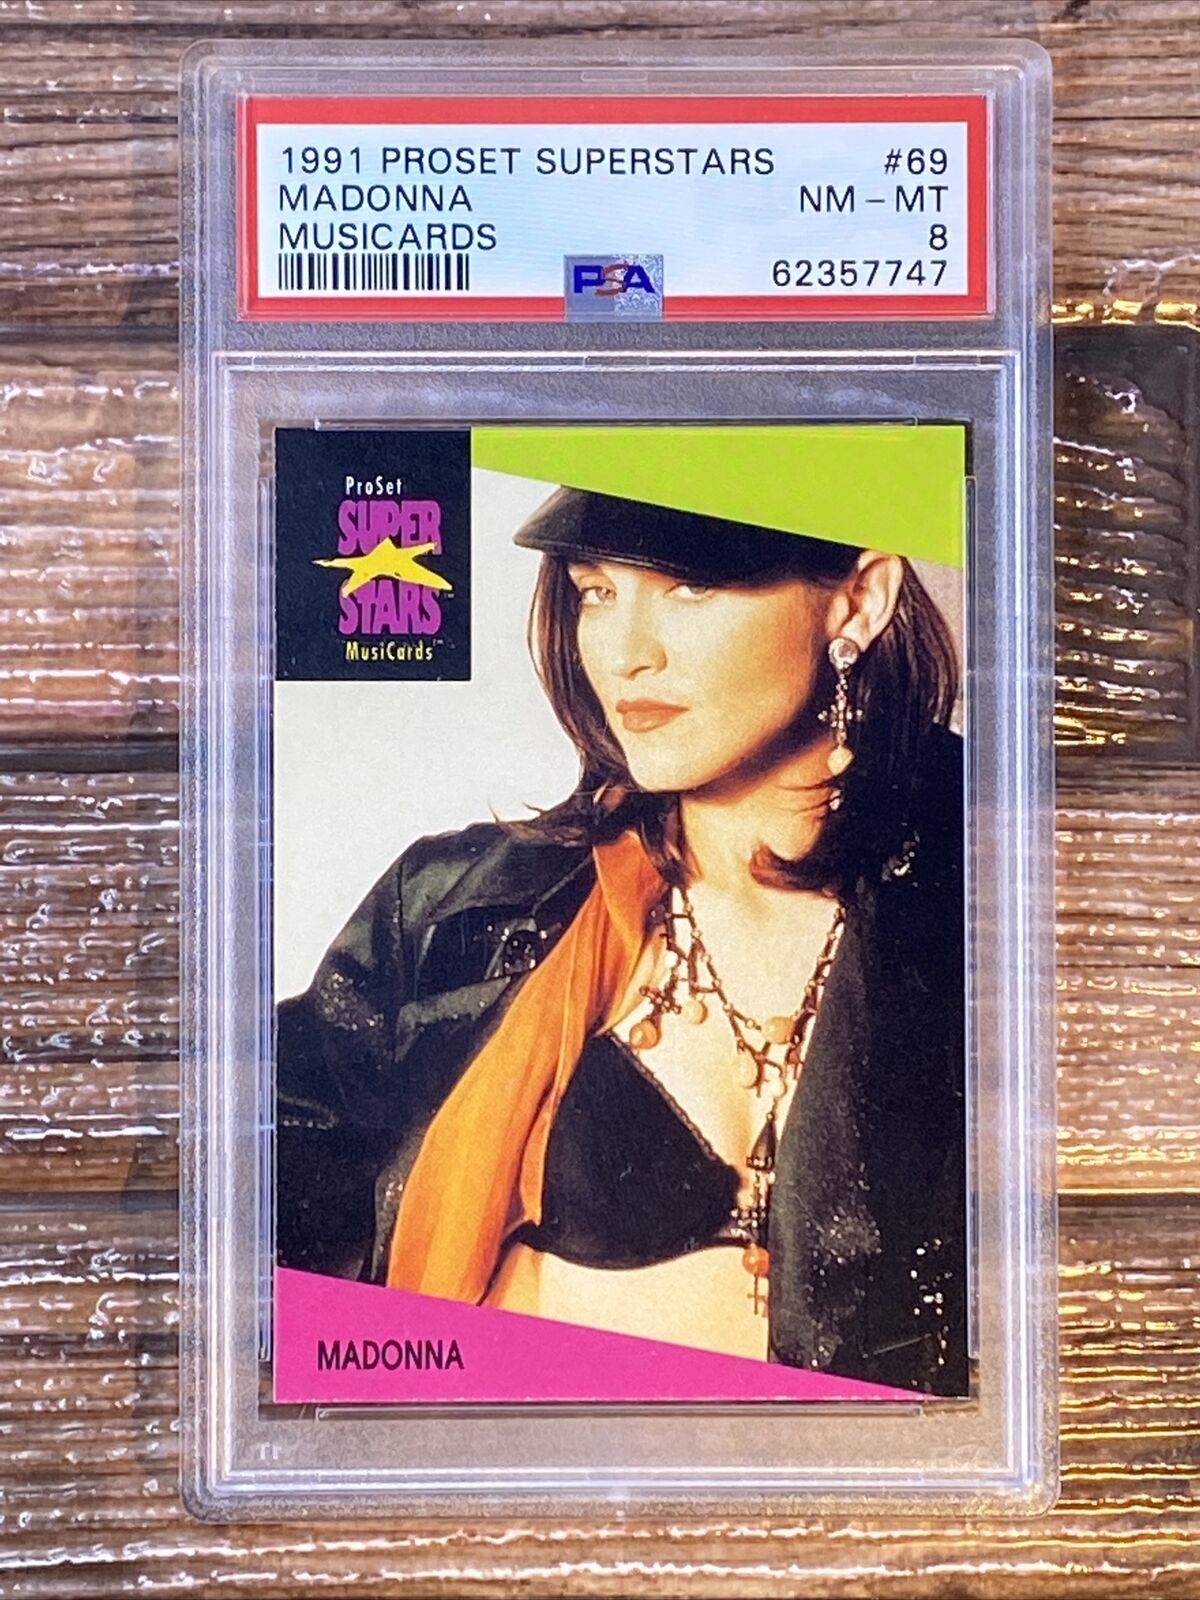 1991 Pro Set Super Stars Madonna Music Trading Card #69 PSA8